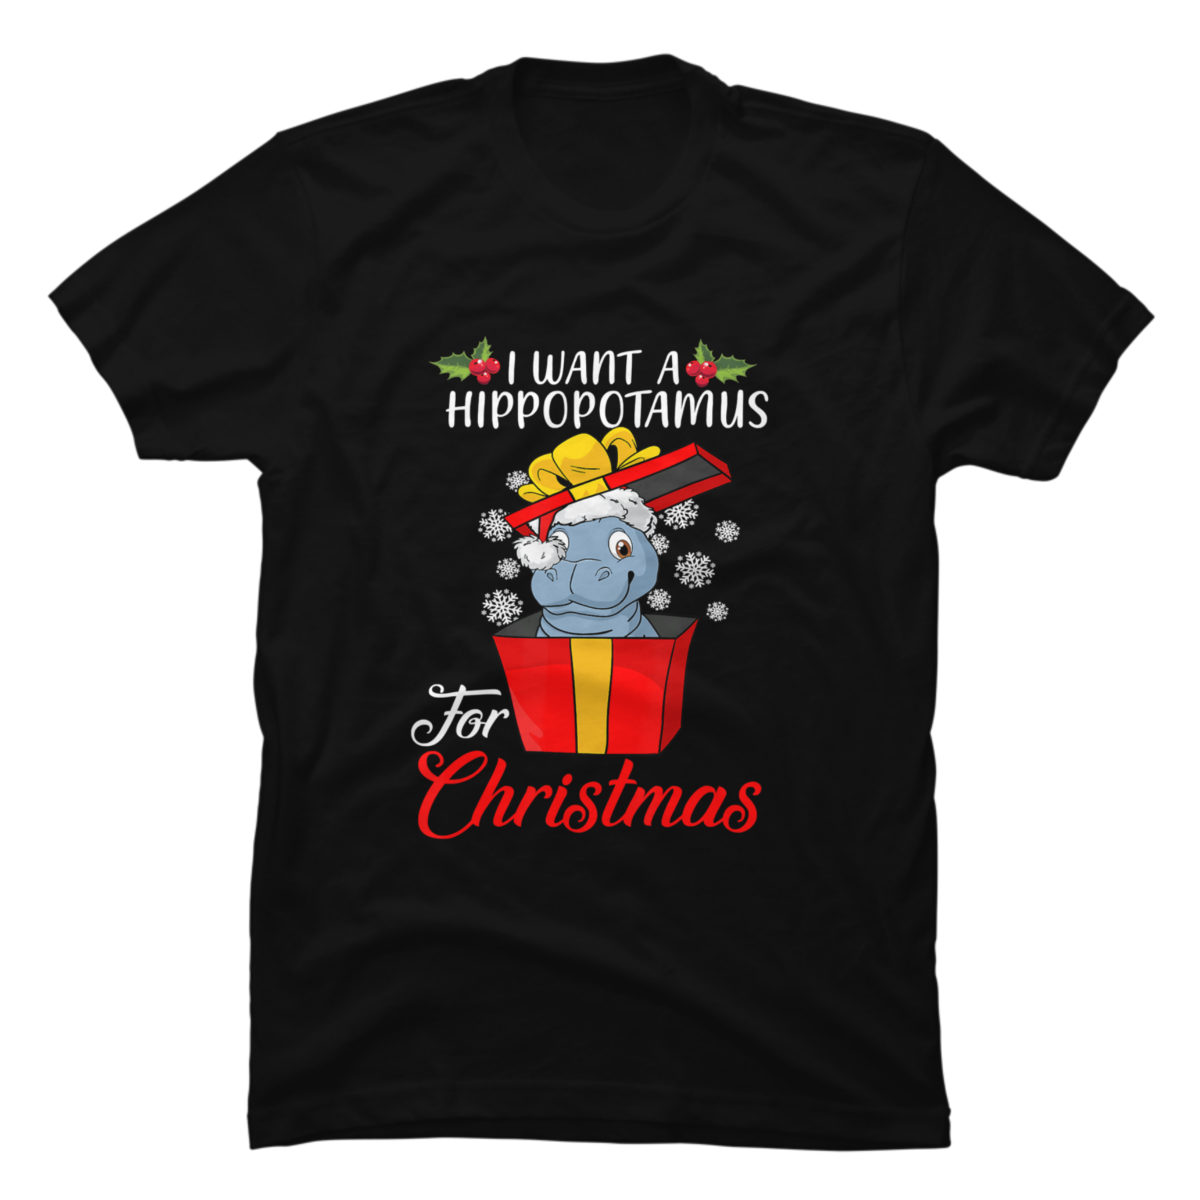 i want a hippopotamus for christmas shirt